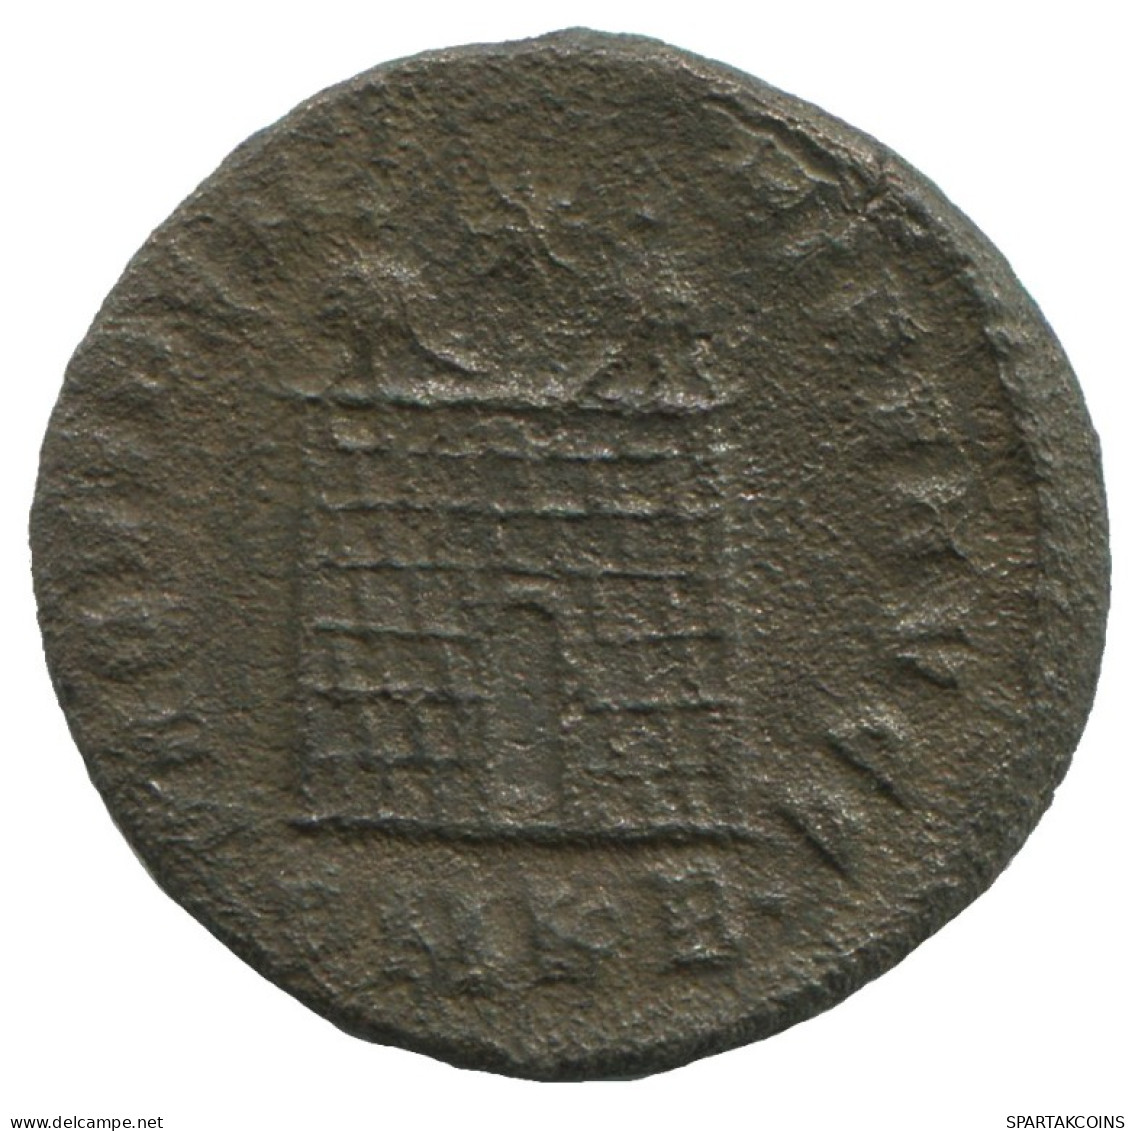 CONSTANTINE I THESSALONICA AD324-325 PROVIDENTIAE AVGG 2.8g/19mm #ANN1613.30.D.A - L'Empire Chrétien (307 à 363)